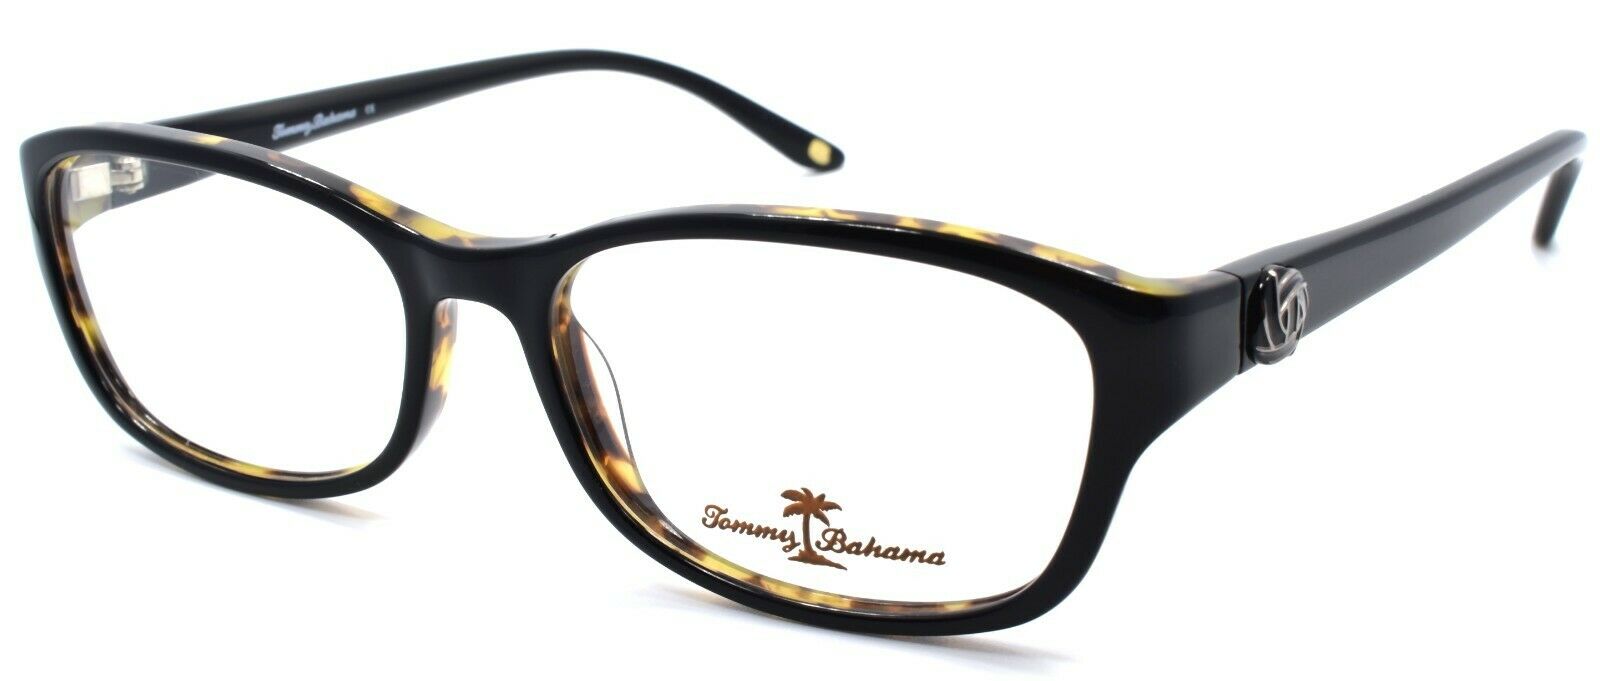 1-Tommy Bahama TB5036 226 Women's Eyeglasses Frames 53-16-135 Black / Tortoise-788678561657-IKSpecs